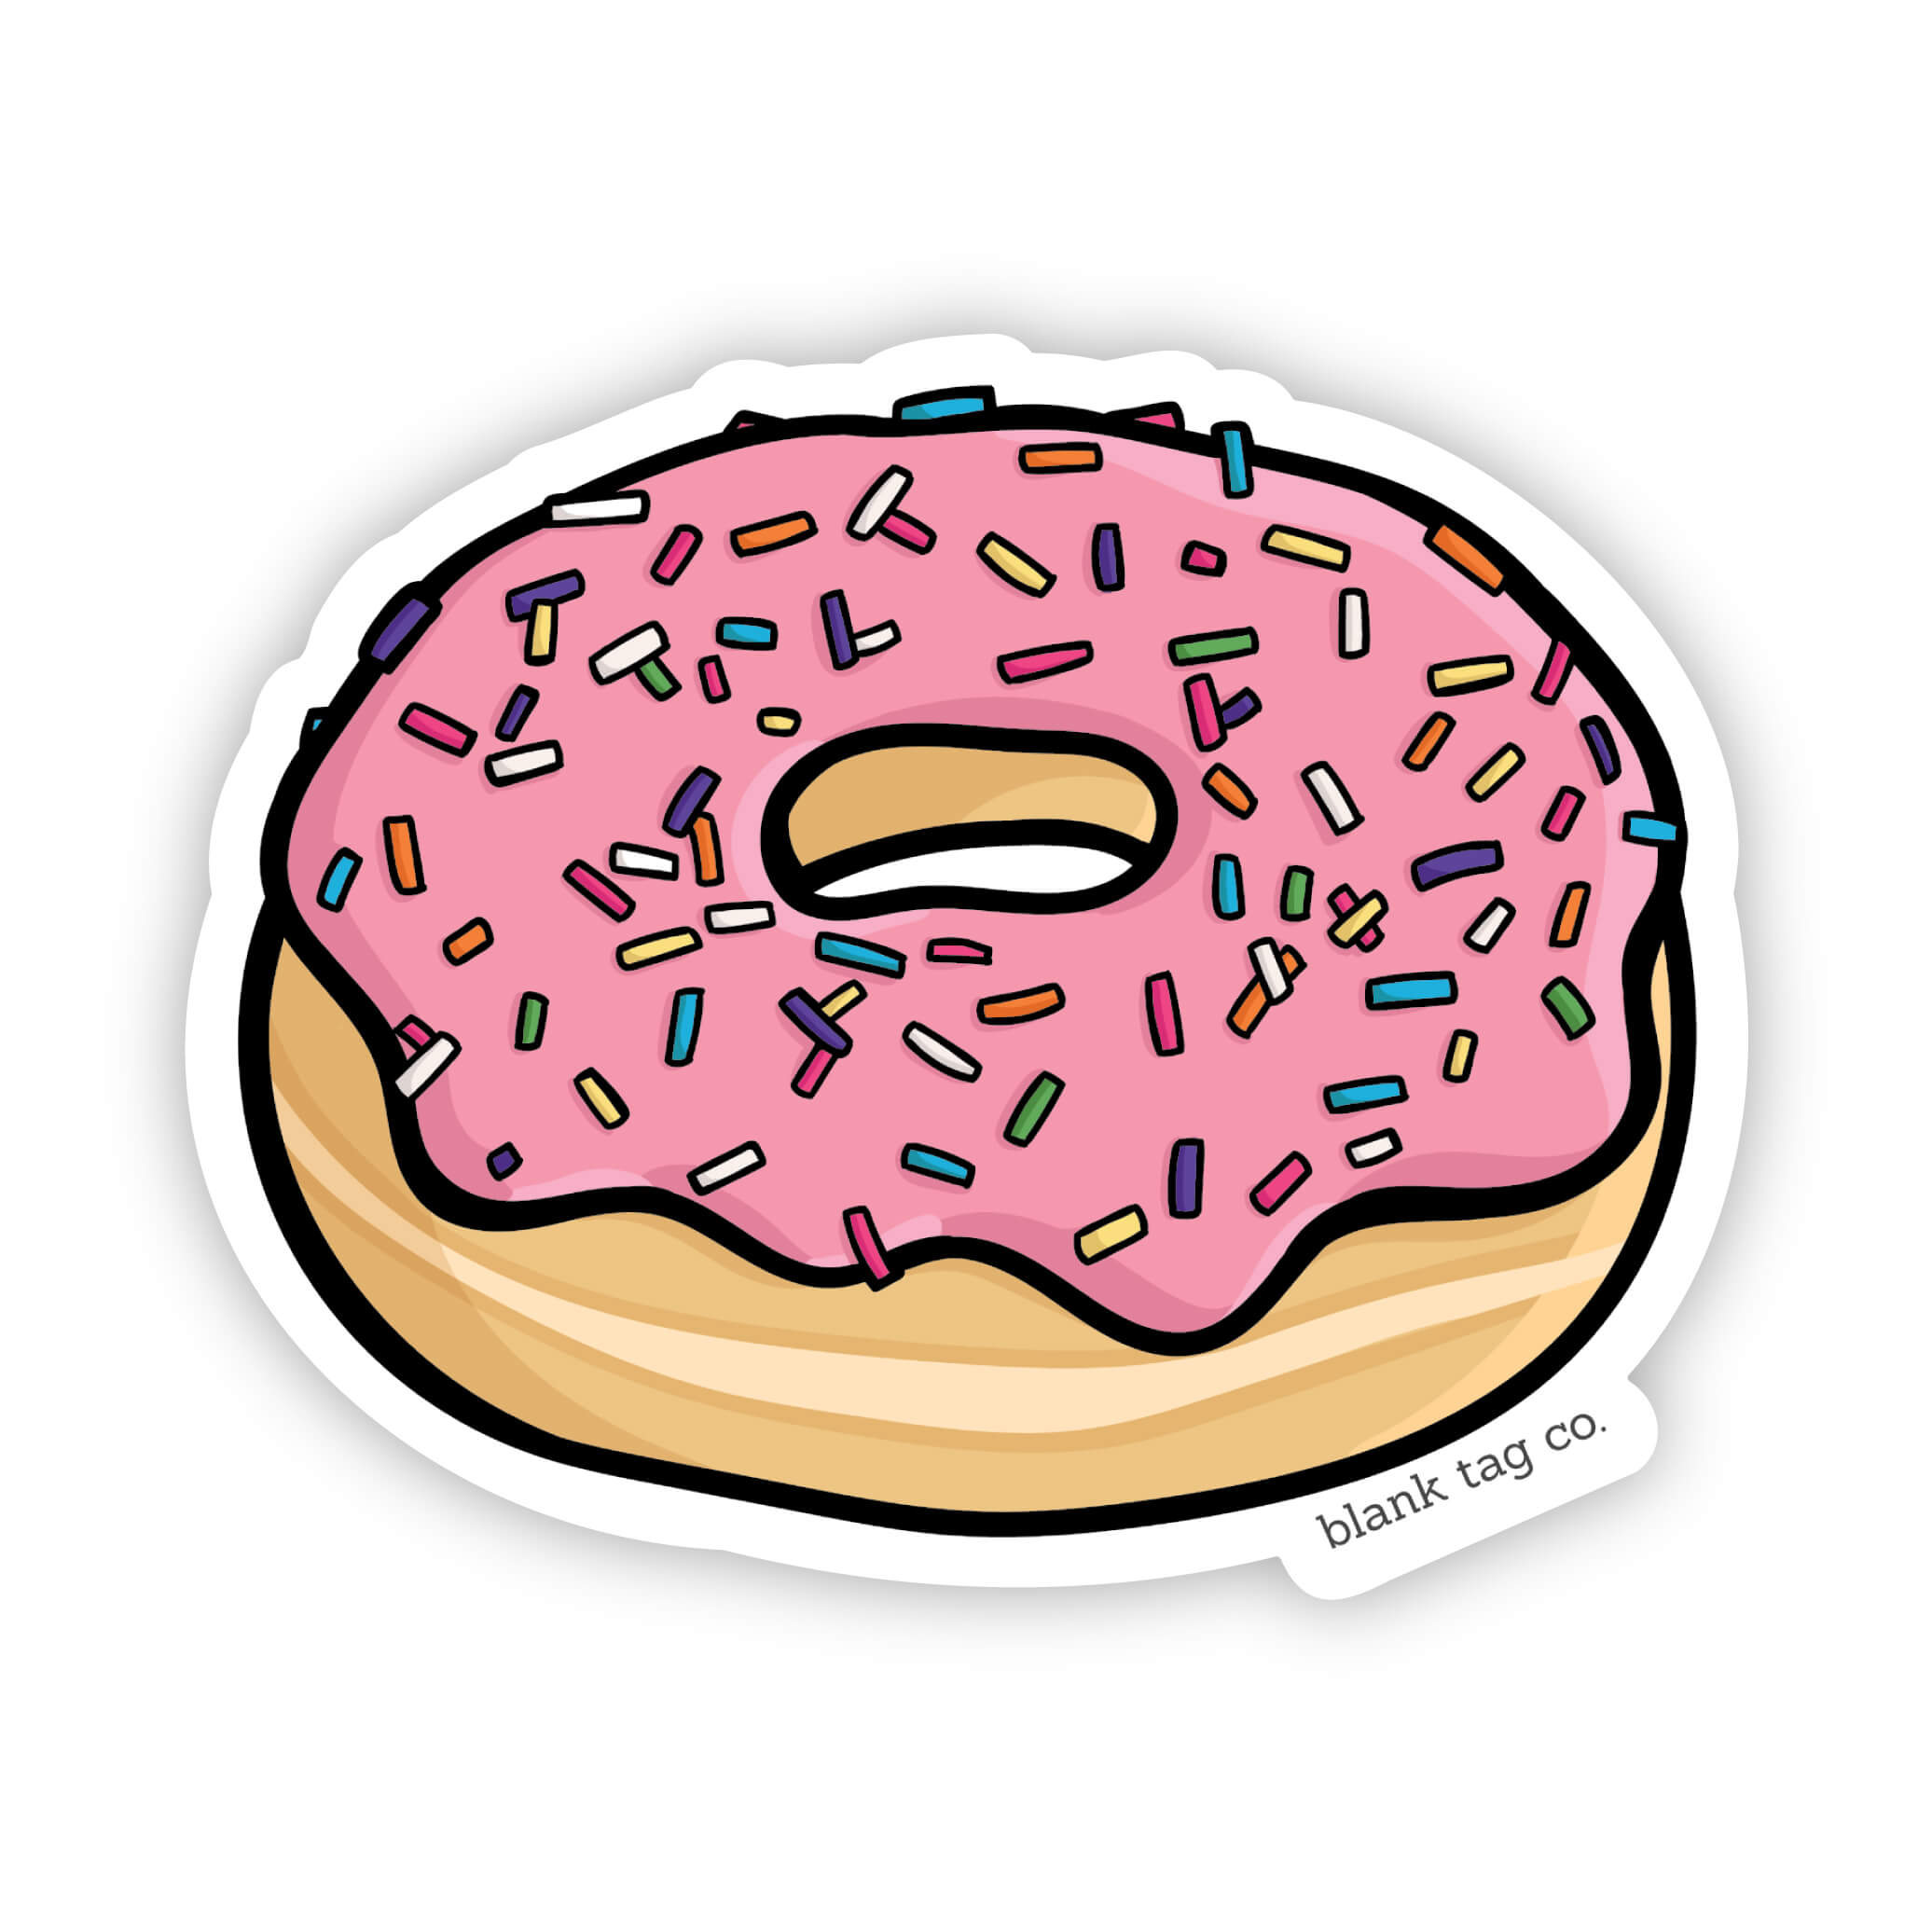 The Sprinkled Donut Sticker